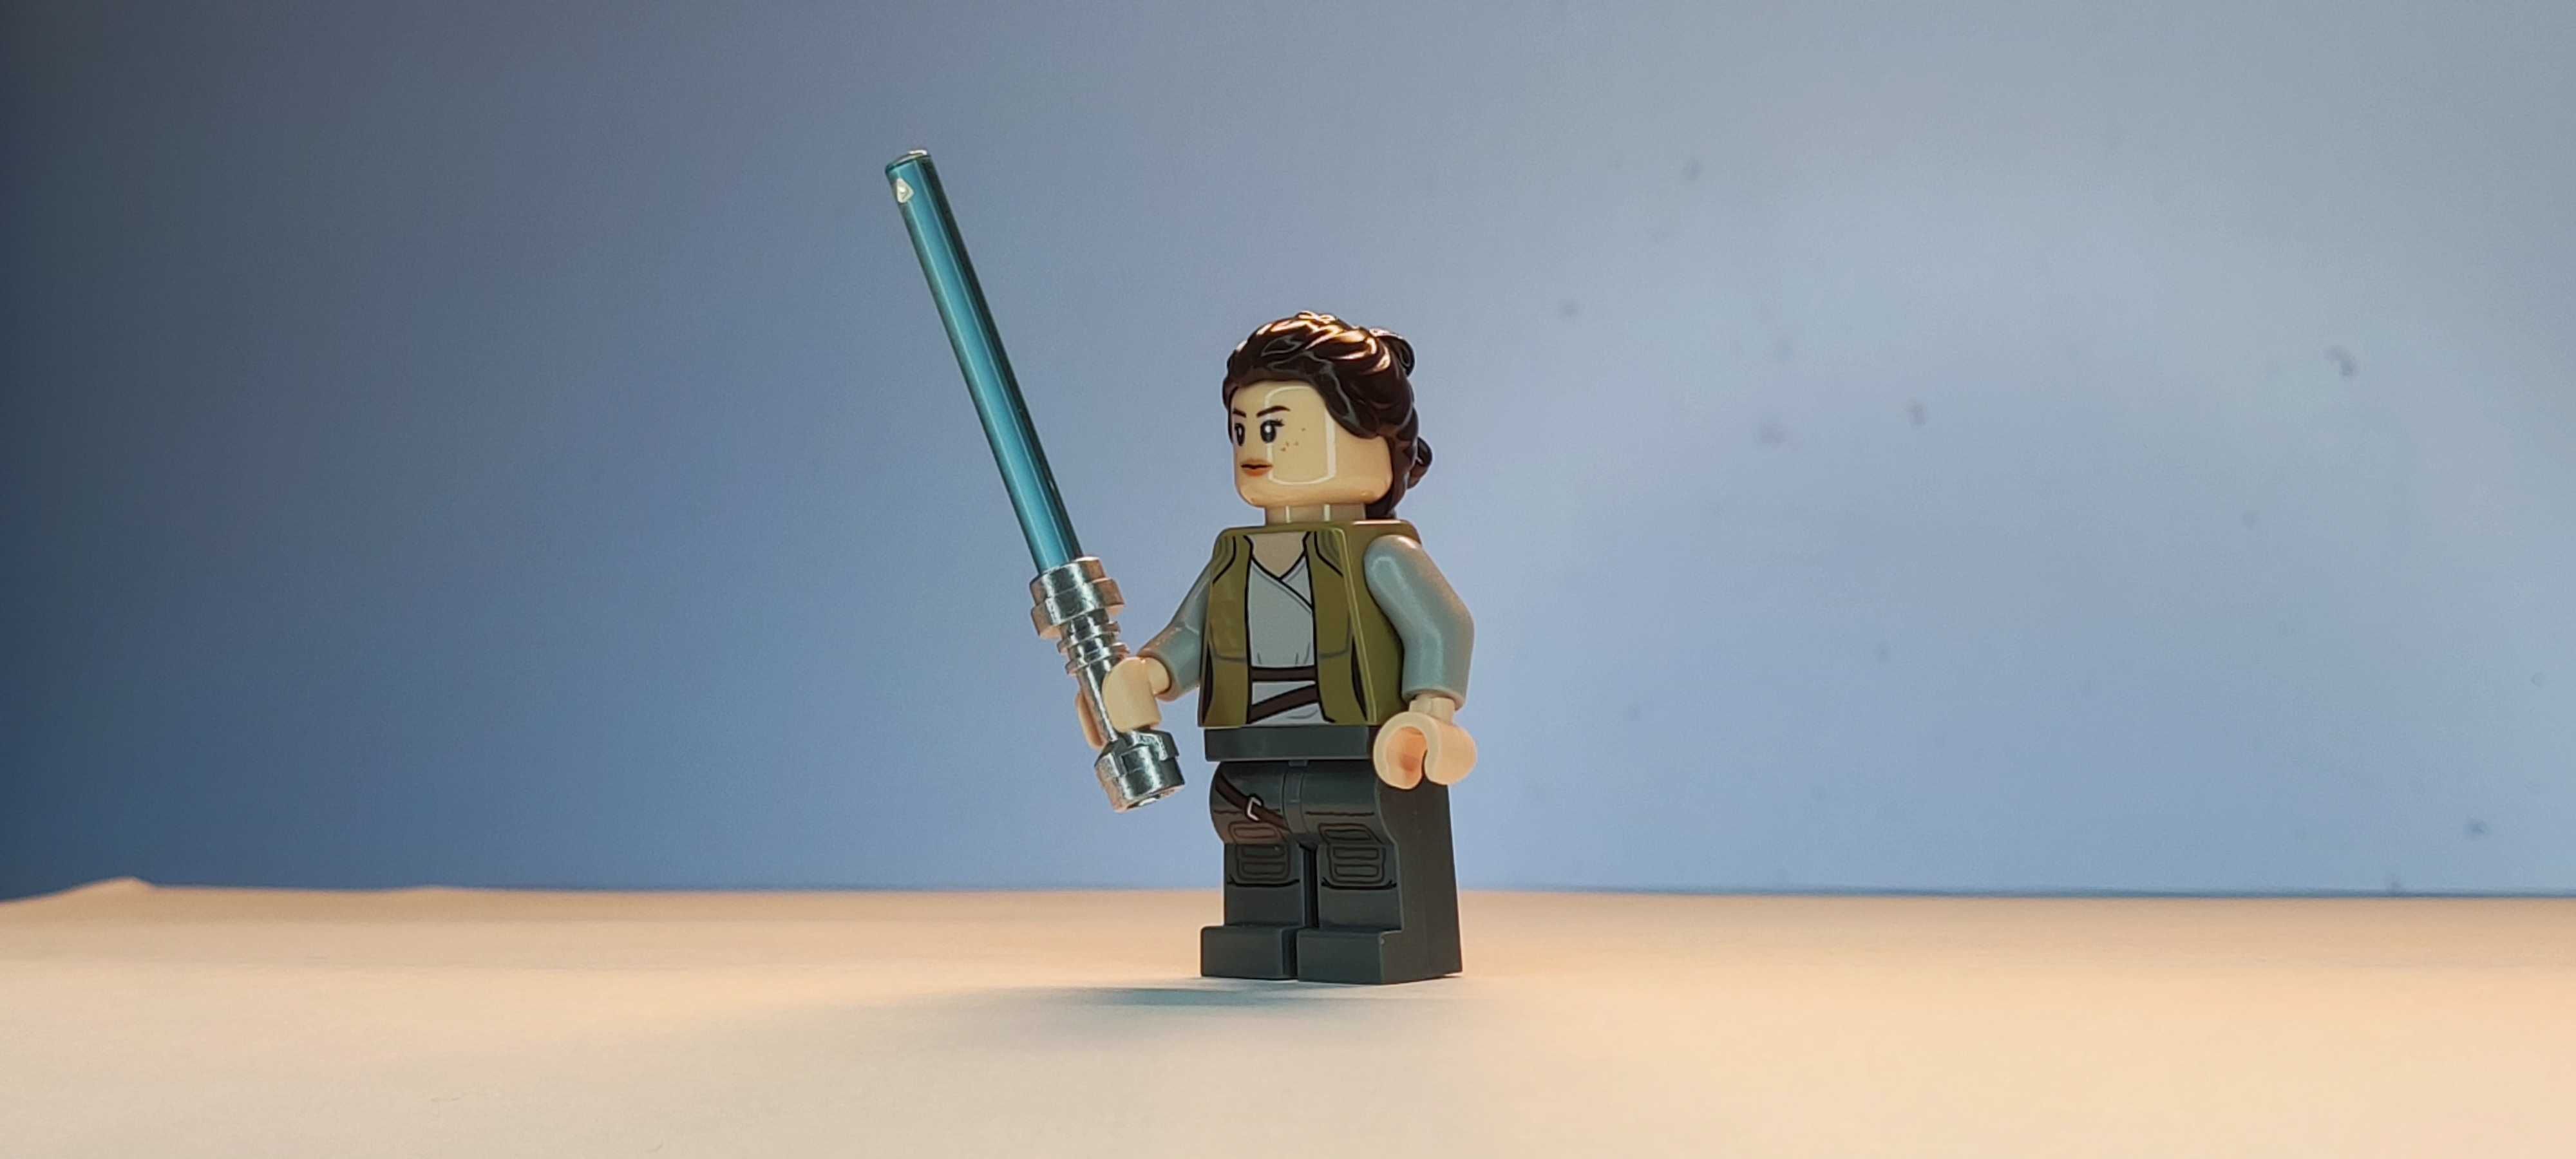 Minifigura Lego - Star Wars: Os Últimos Jedi: Rey Skywalker